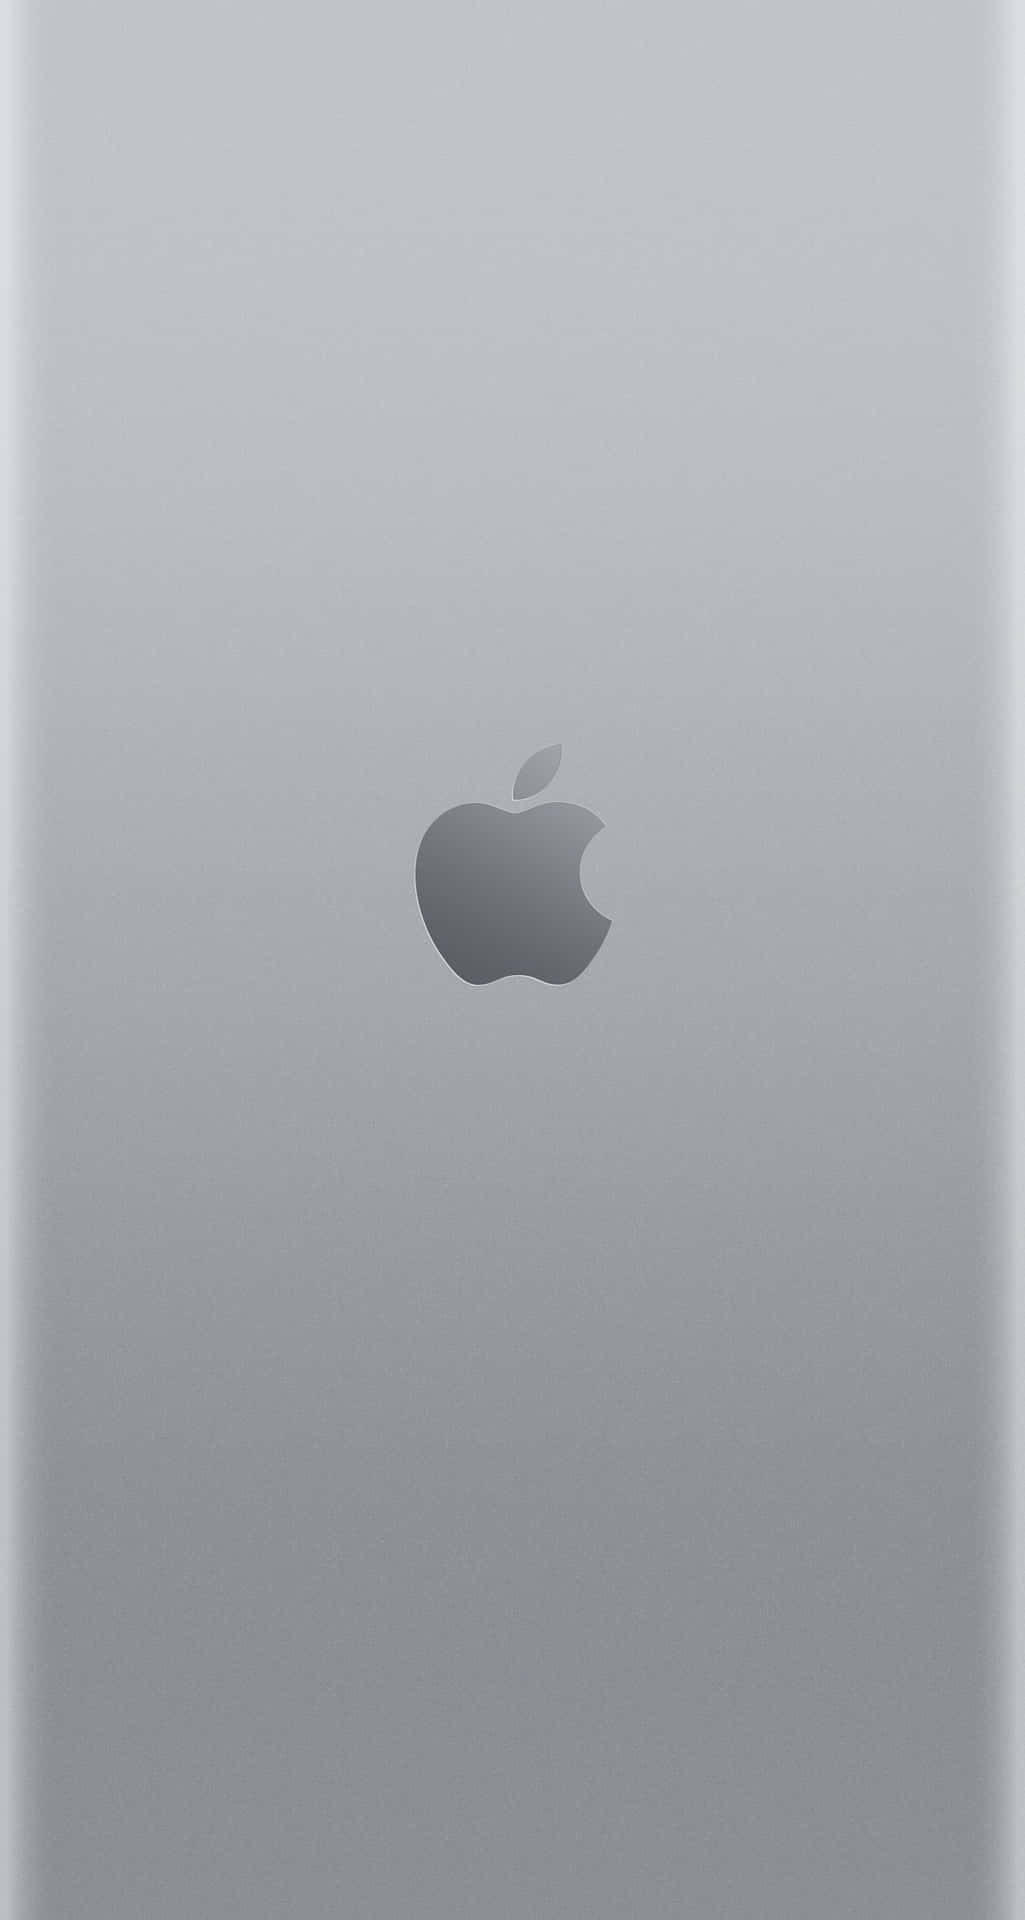 Terrific Iphone X Apple Background